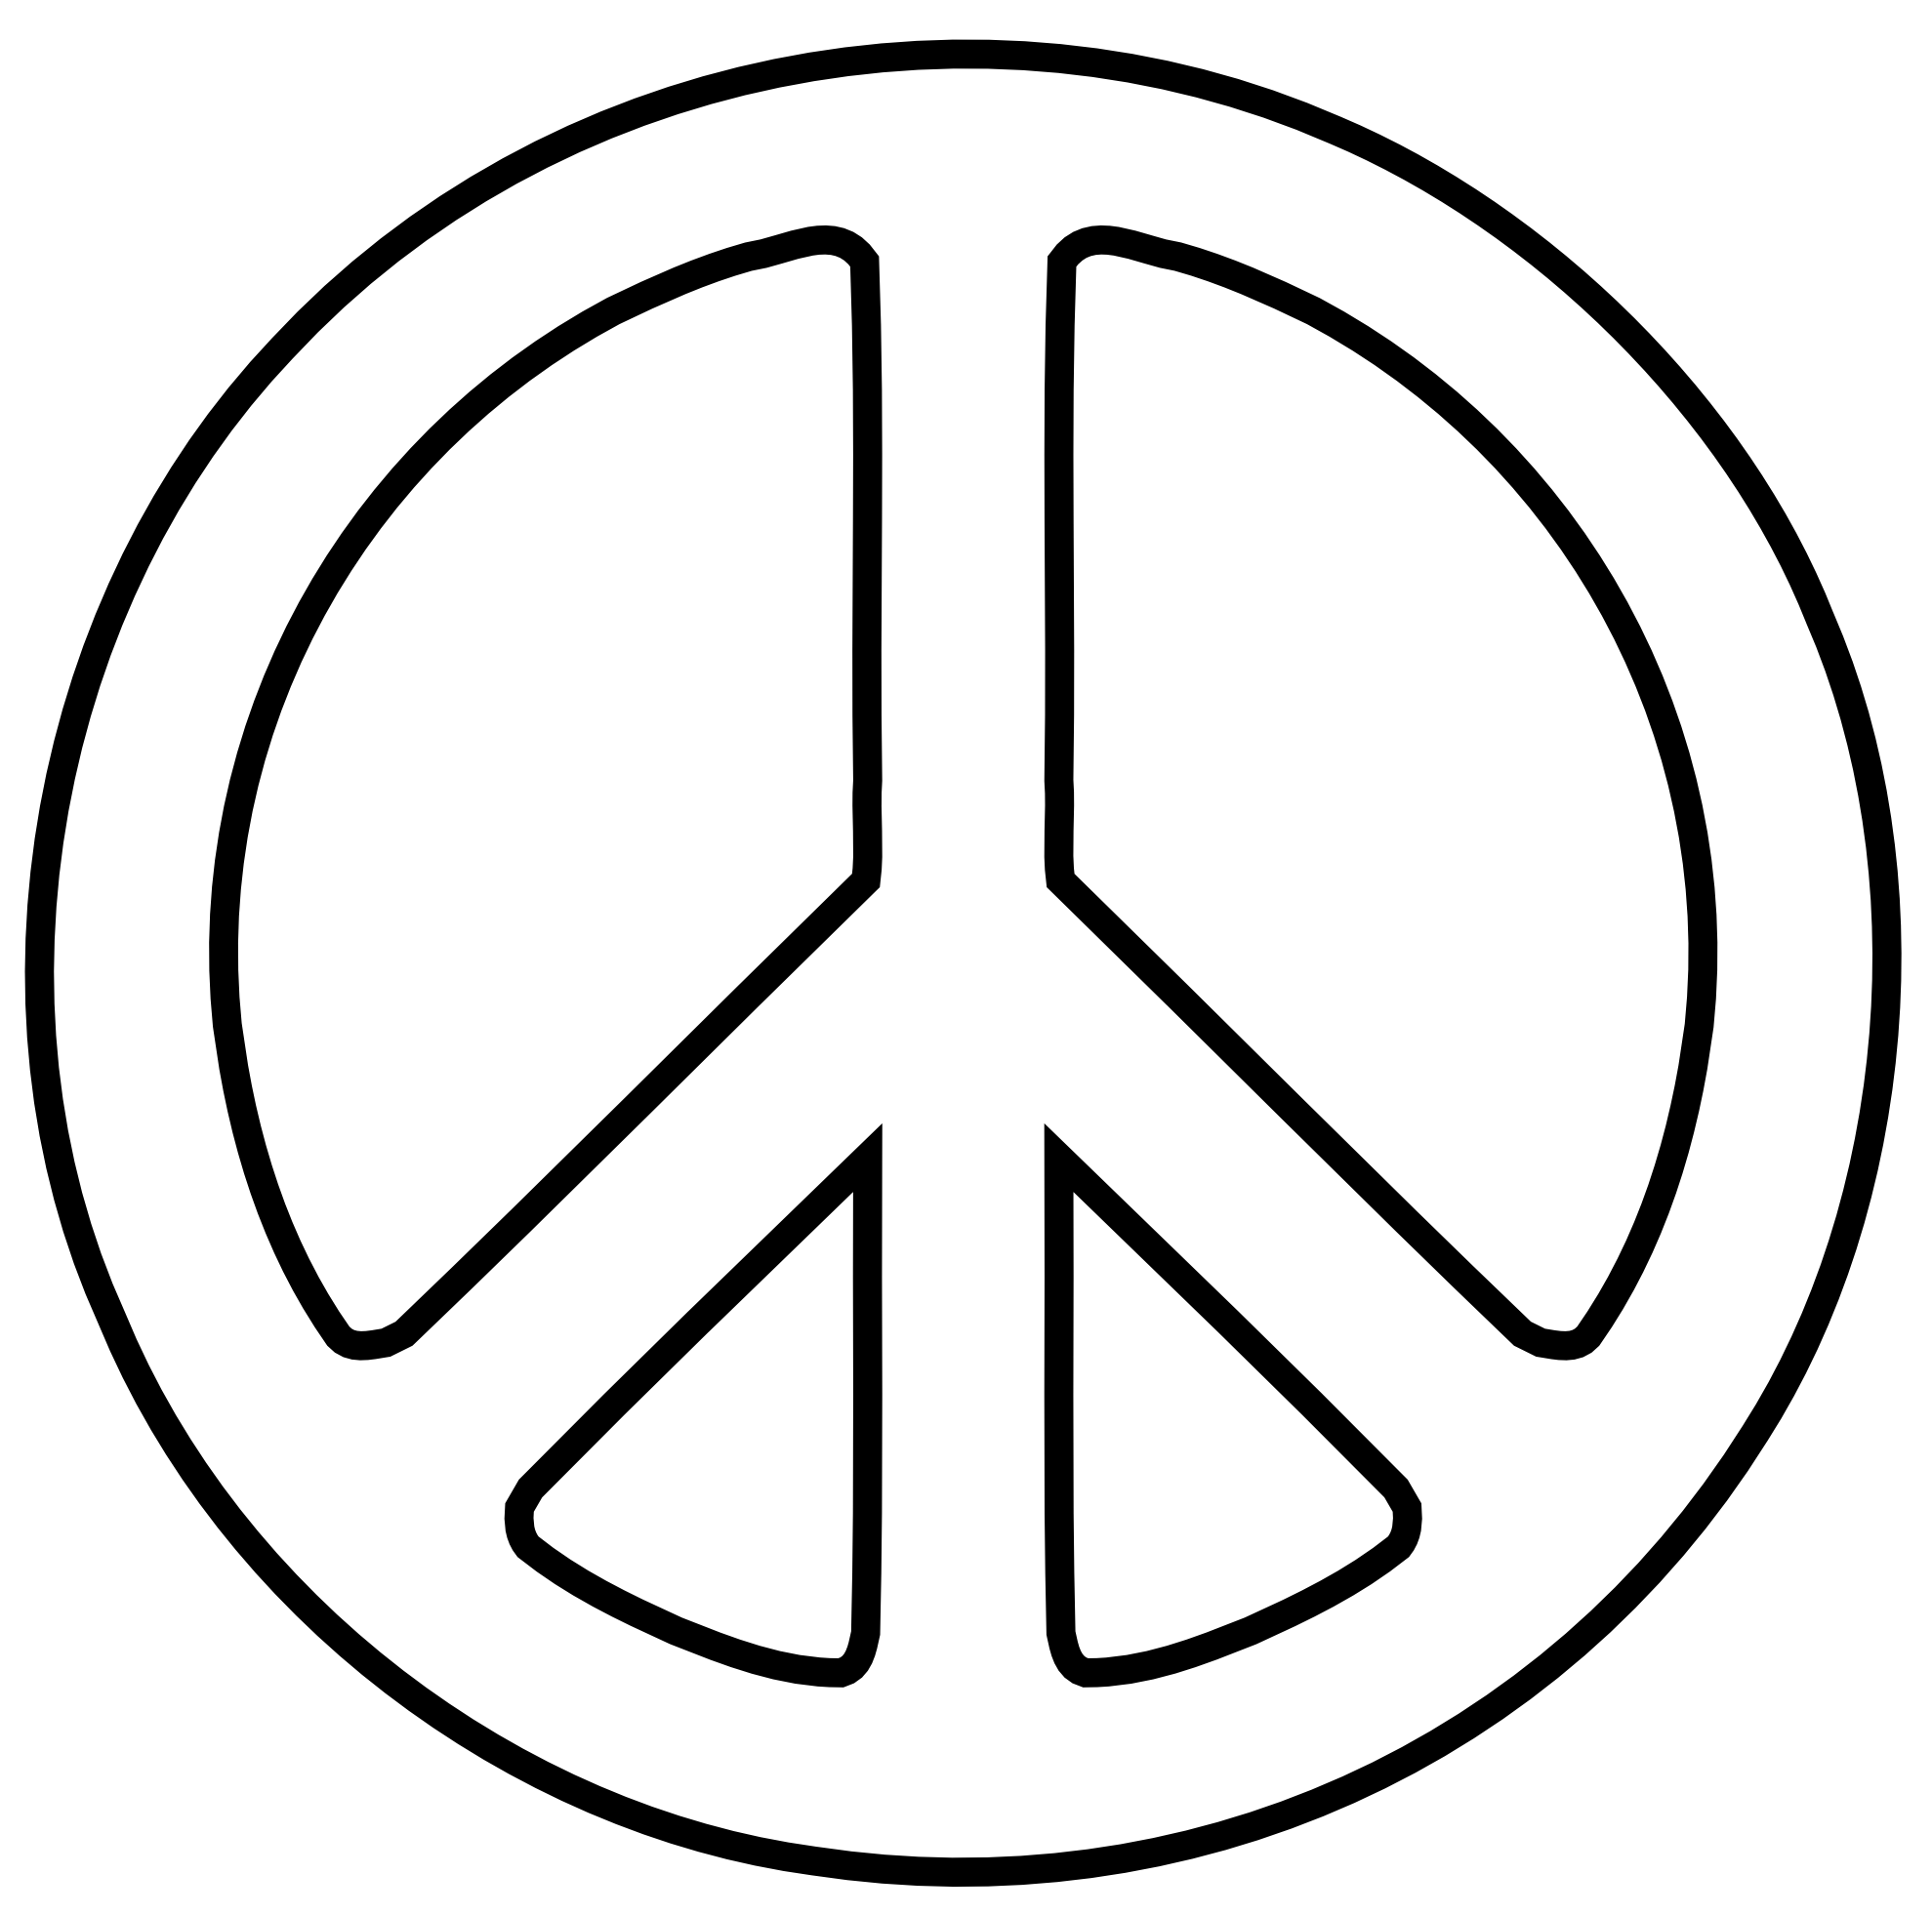 A symbol for peace at San Mames